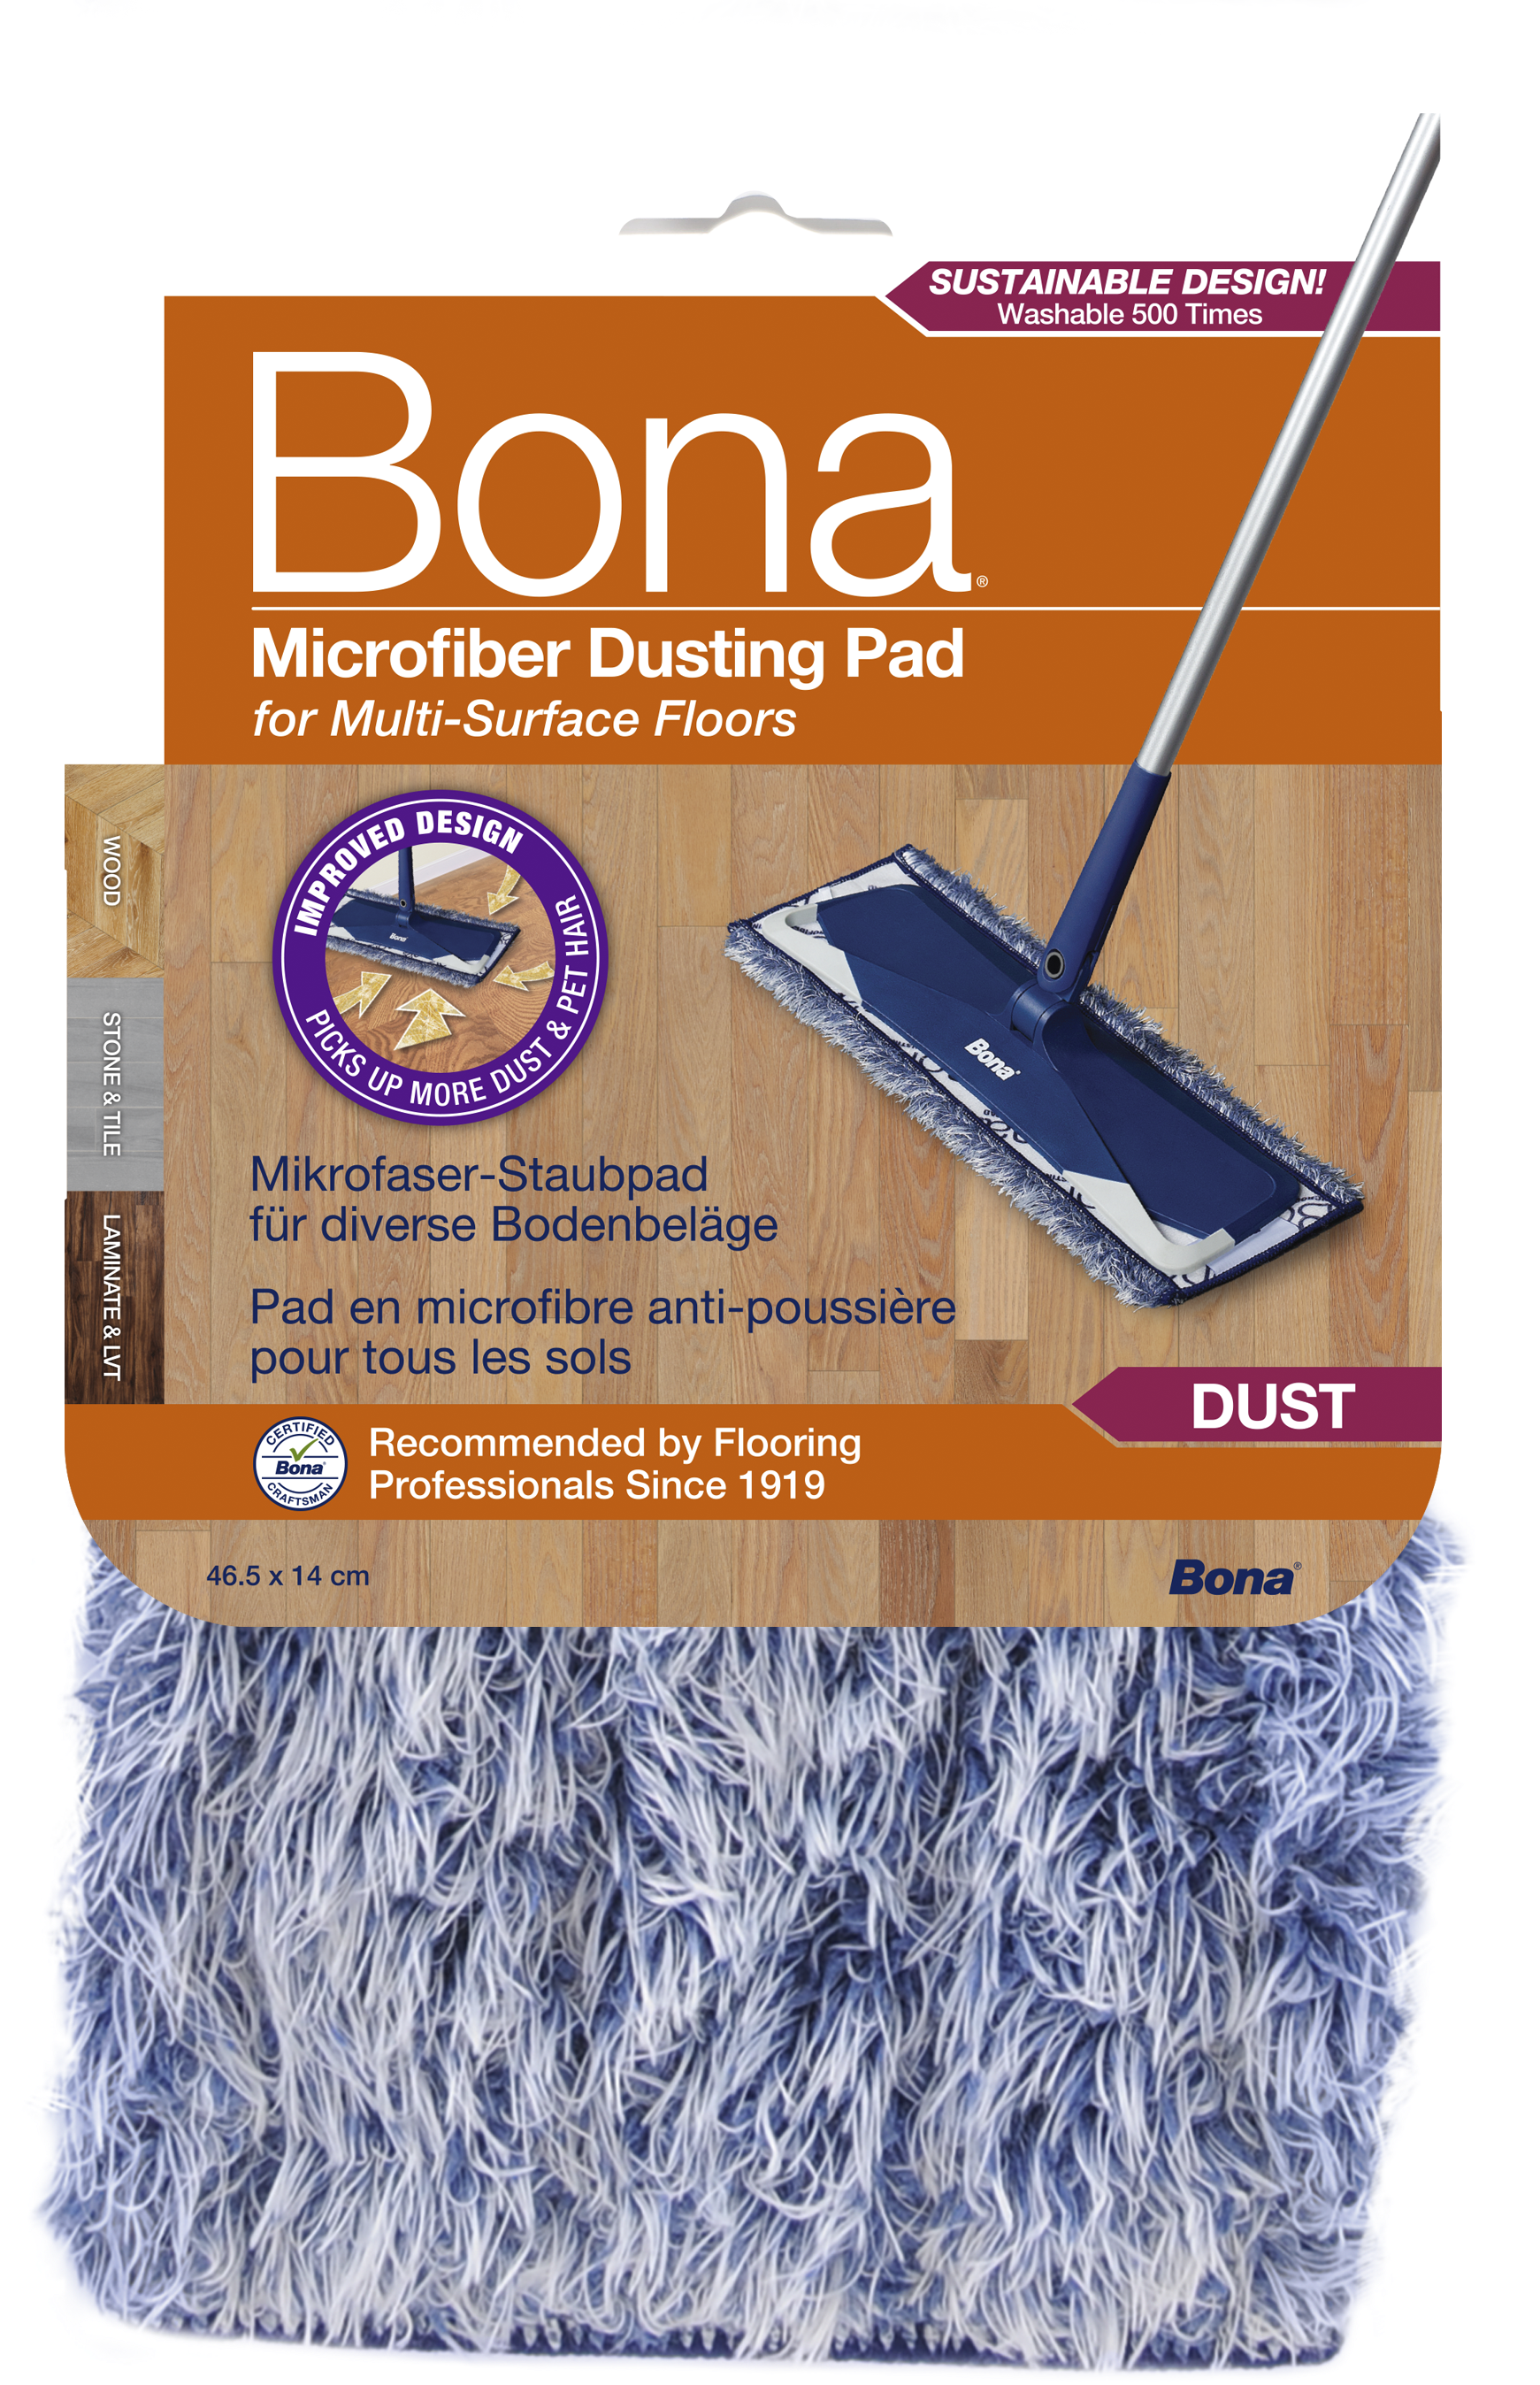 Bona Microfiber Dusting Pad Hard Wood Floor Mop Machine-Washable Dust Dirt Hair 